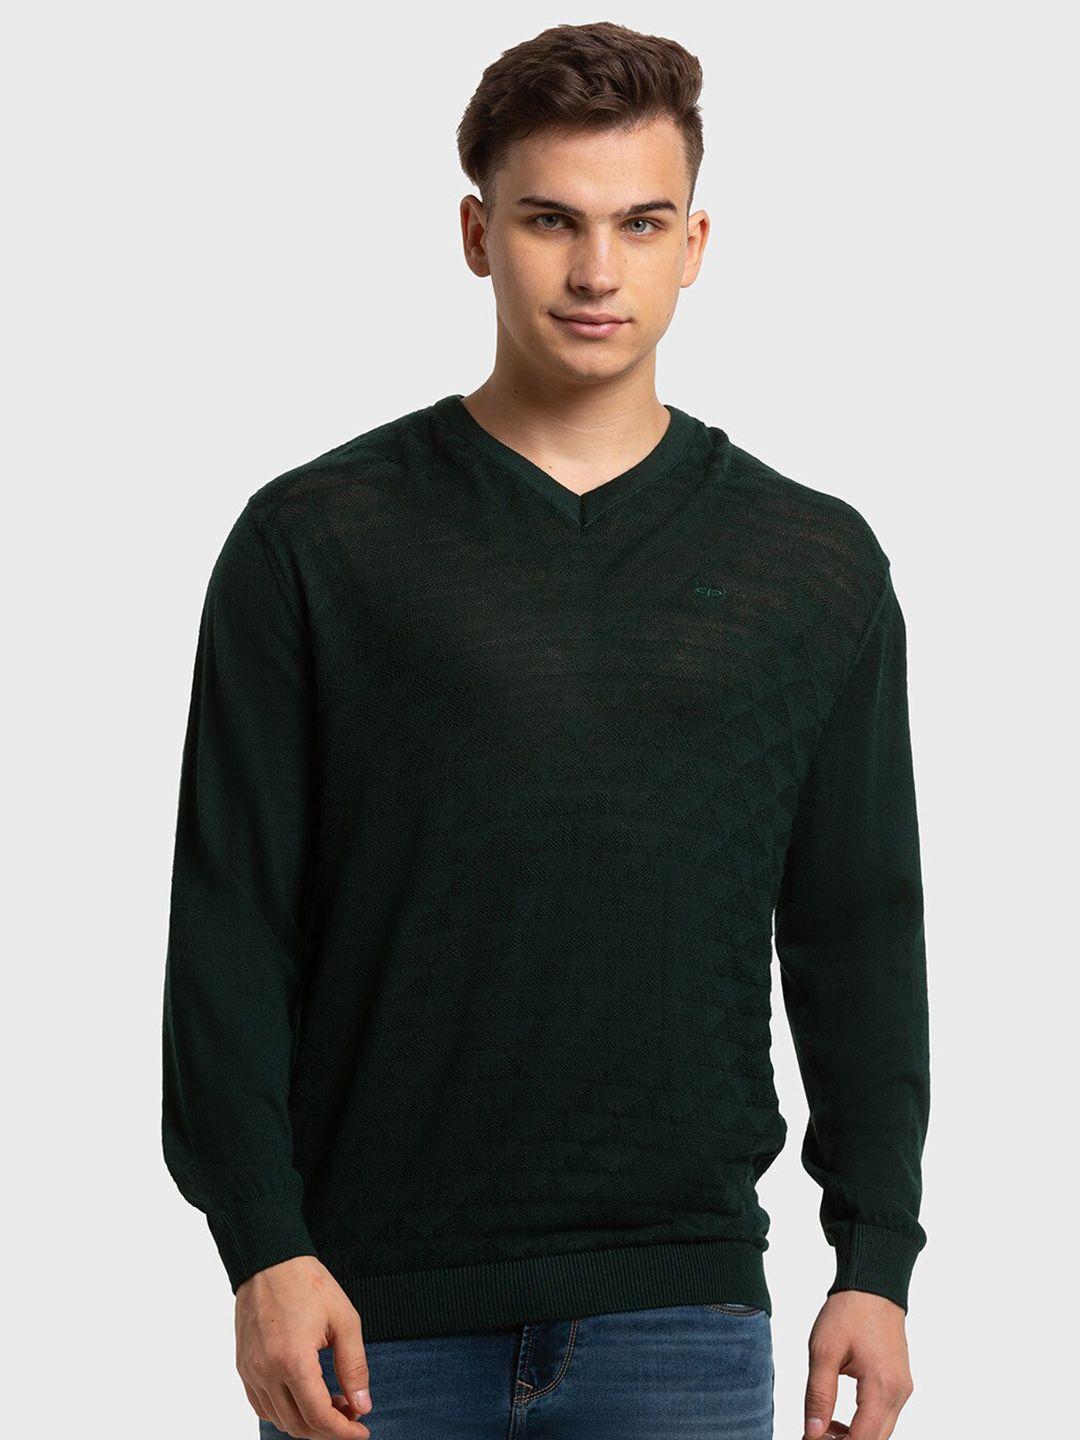 colorplus-men-self-design-v-neck-pullover-sweater